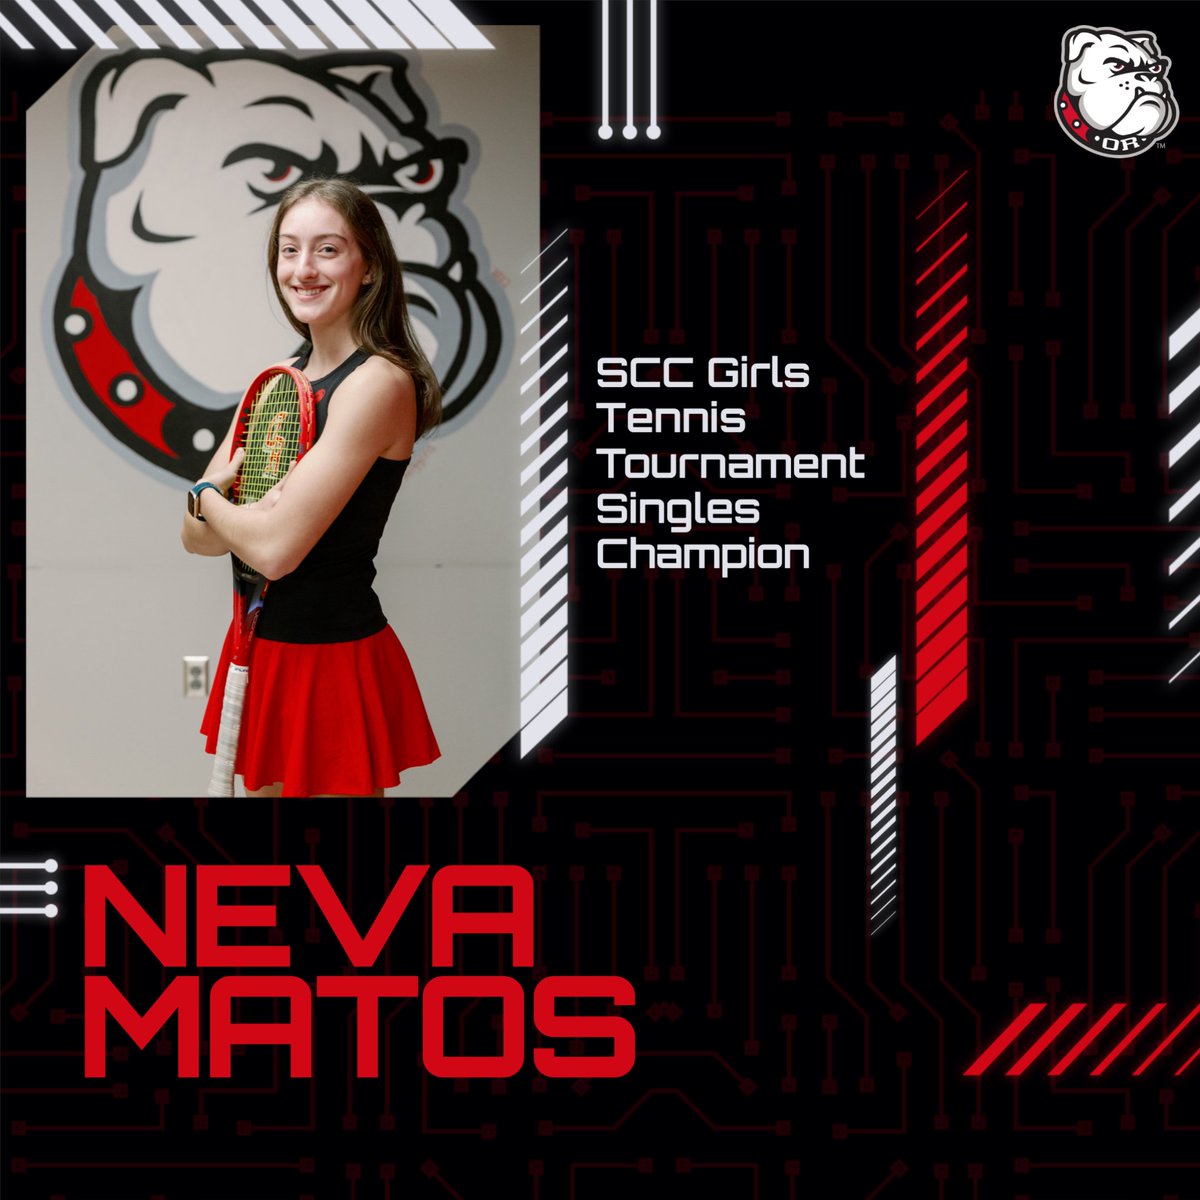 SCC Girls Tennis Tournament Singles Champion: Neva Matos!! Congrats Neva!